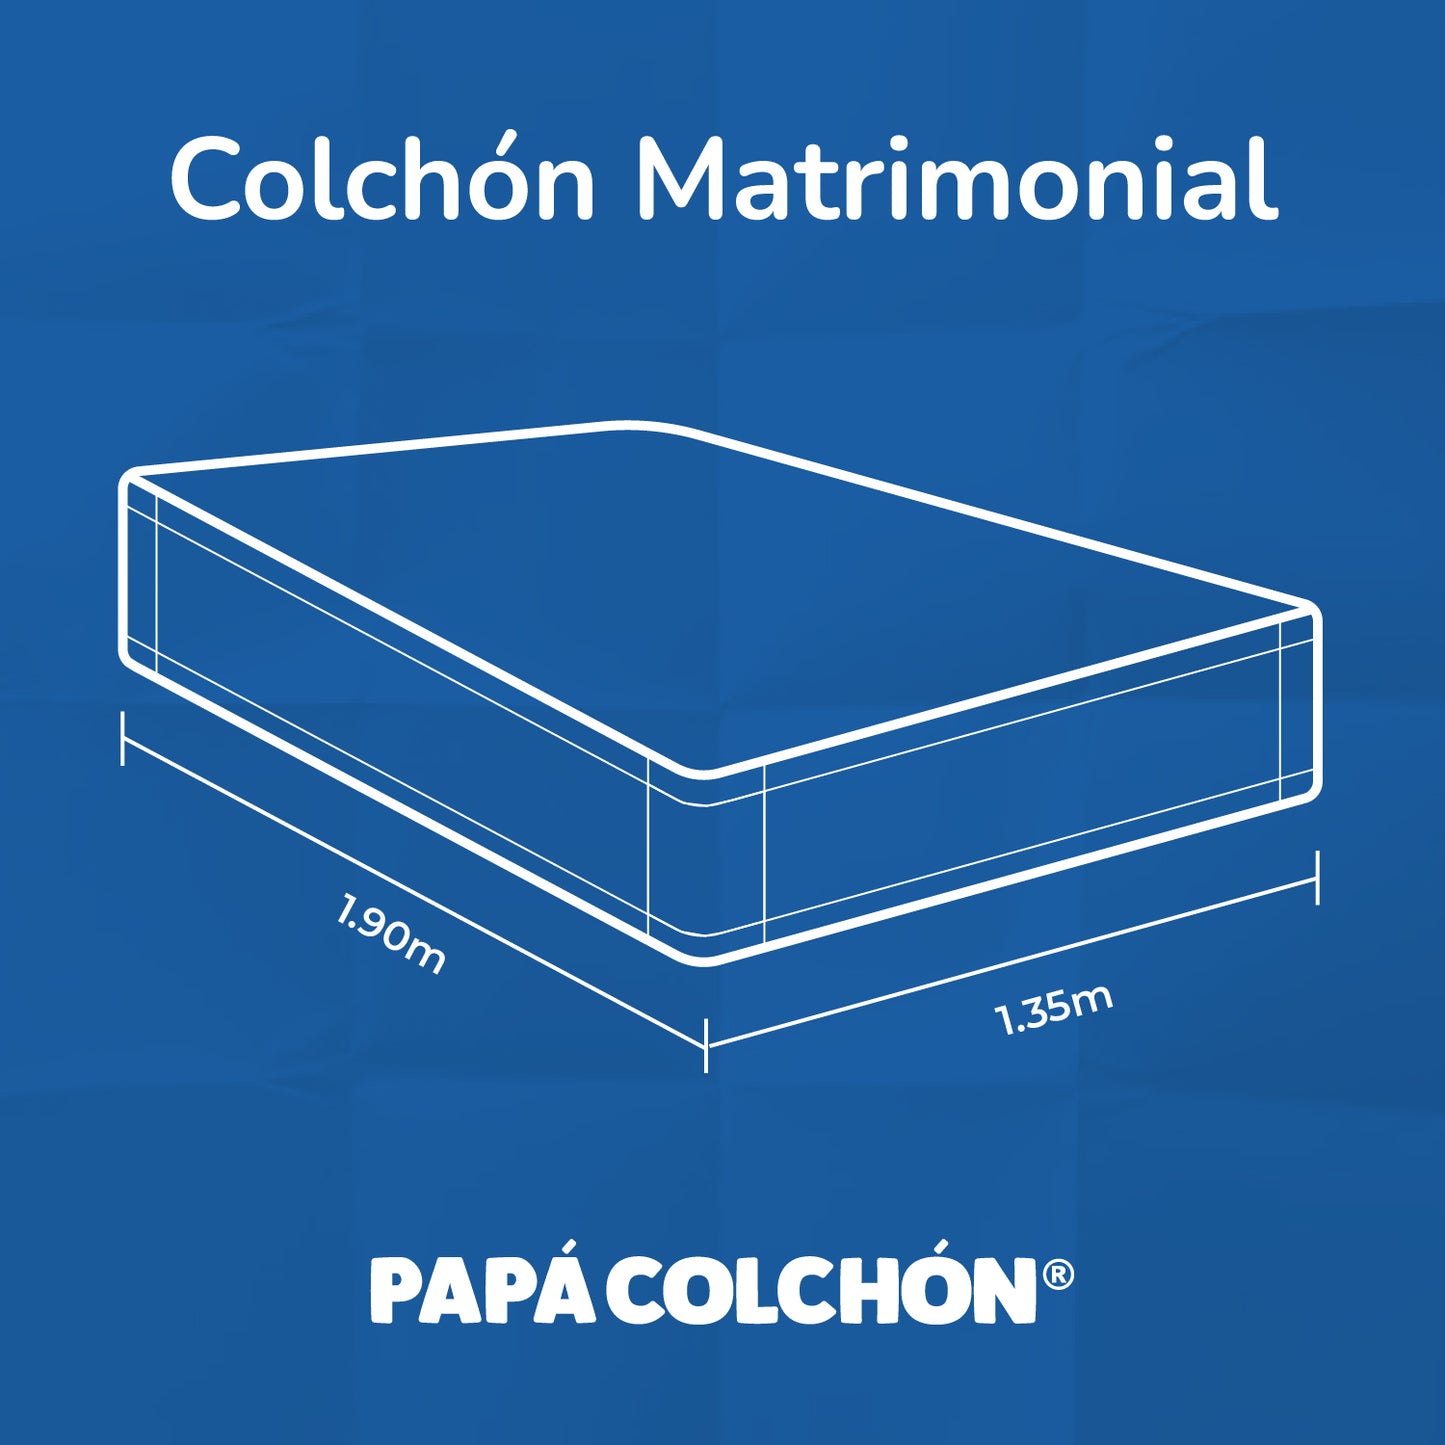 Colchón Restonic Matrimonial B-confort